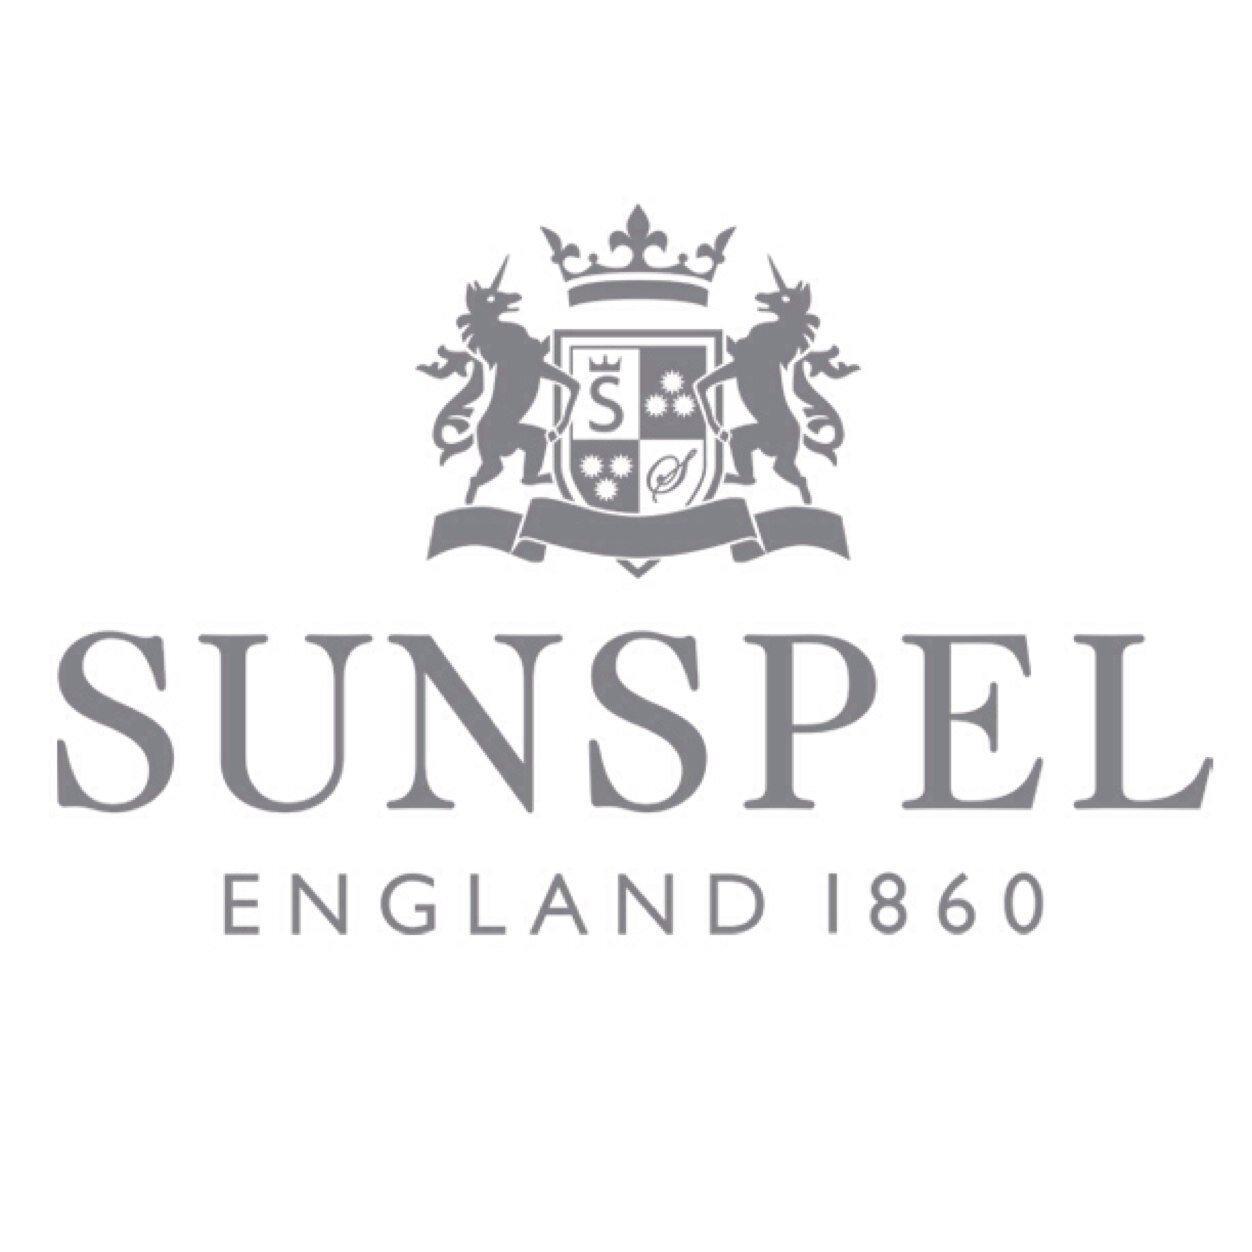 Sunspel is a British heritage clothing brand. Melbourne Store: 77 Gertrude Street, 3065 Fitzroy. T: +61 3 9417 7725 E: gertrude@sunspelaustralia.com.au